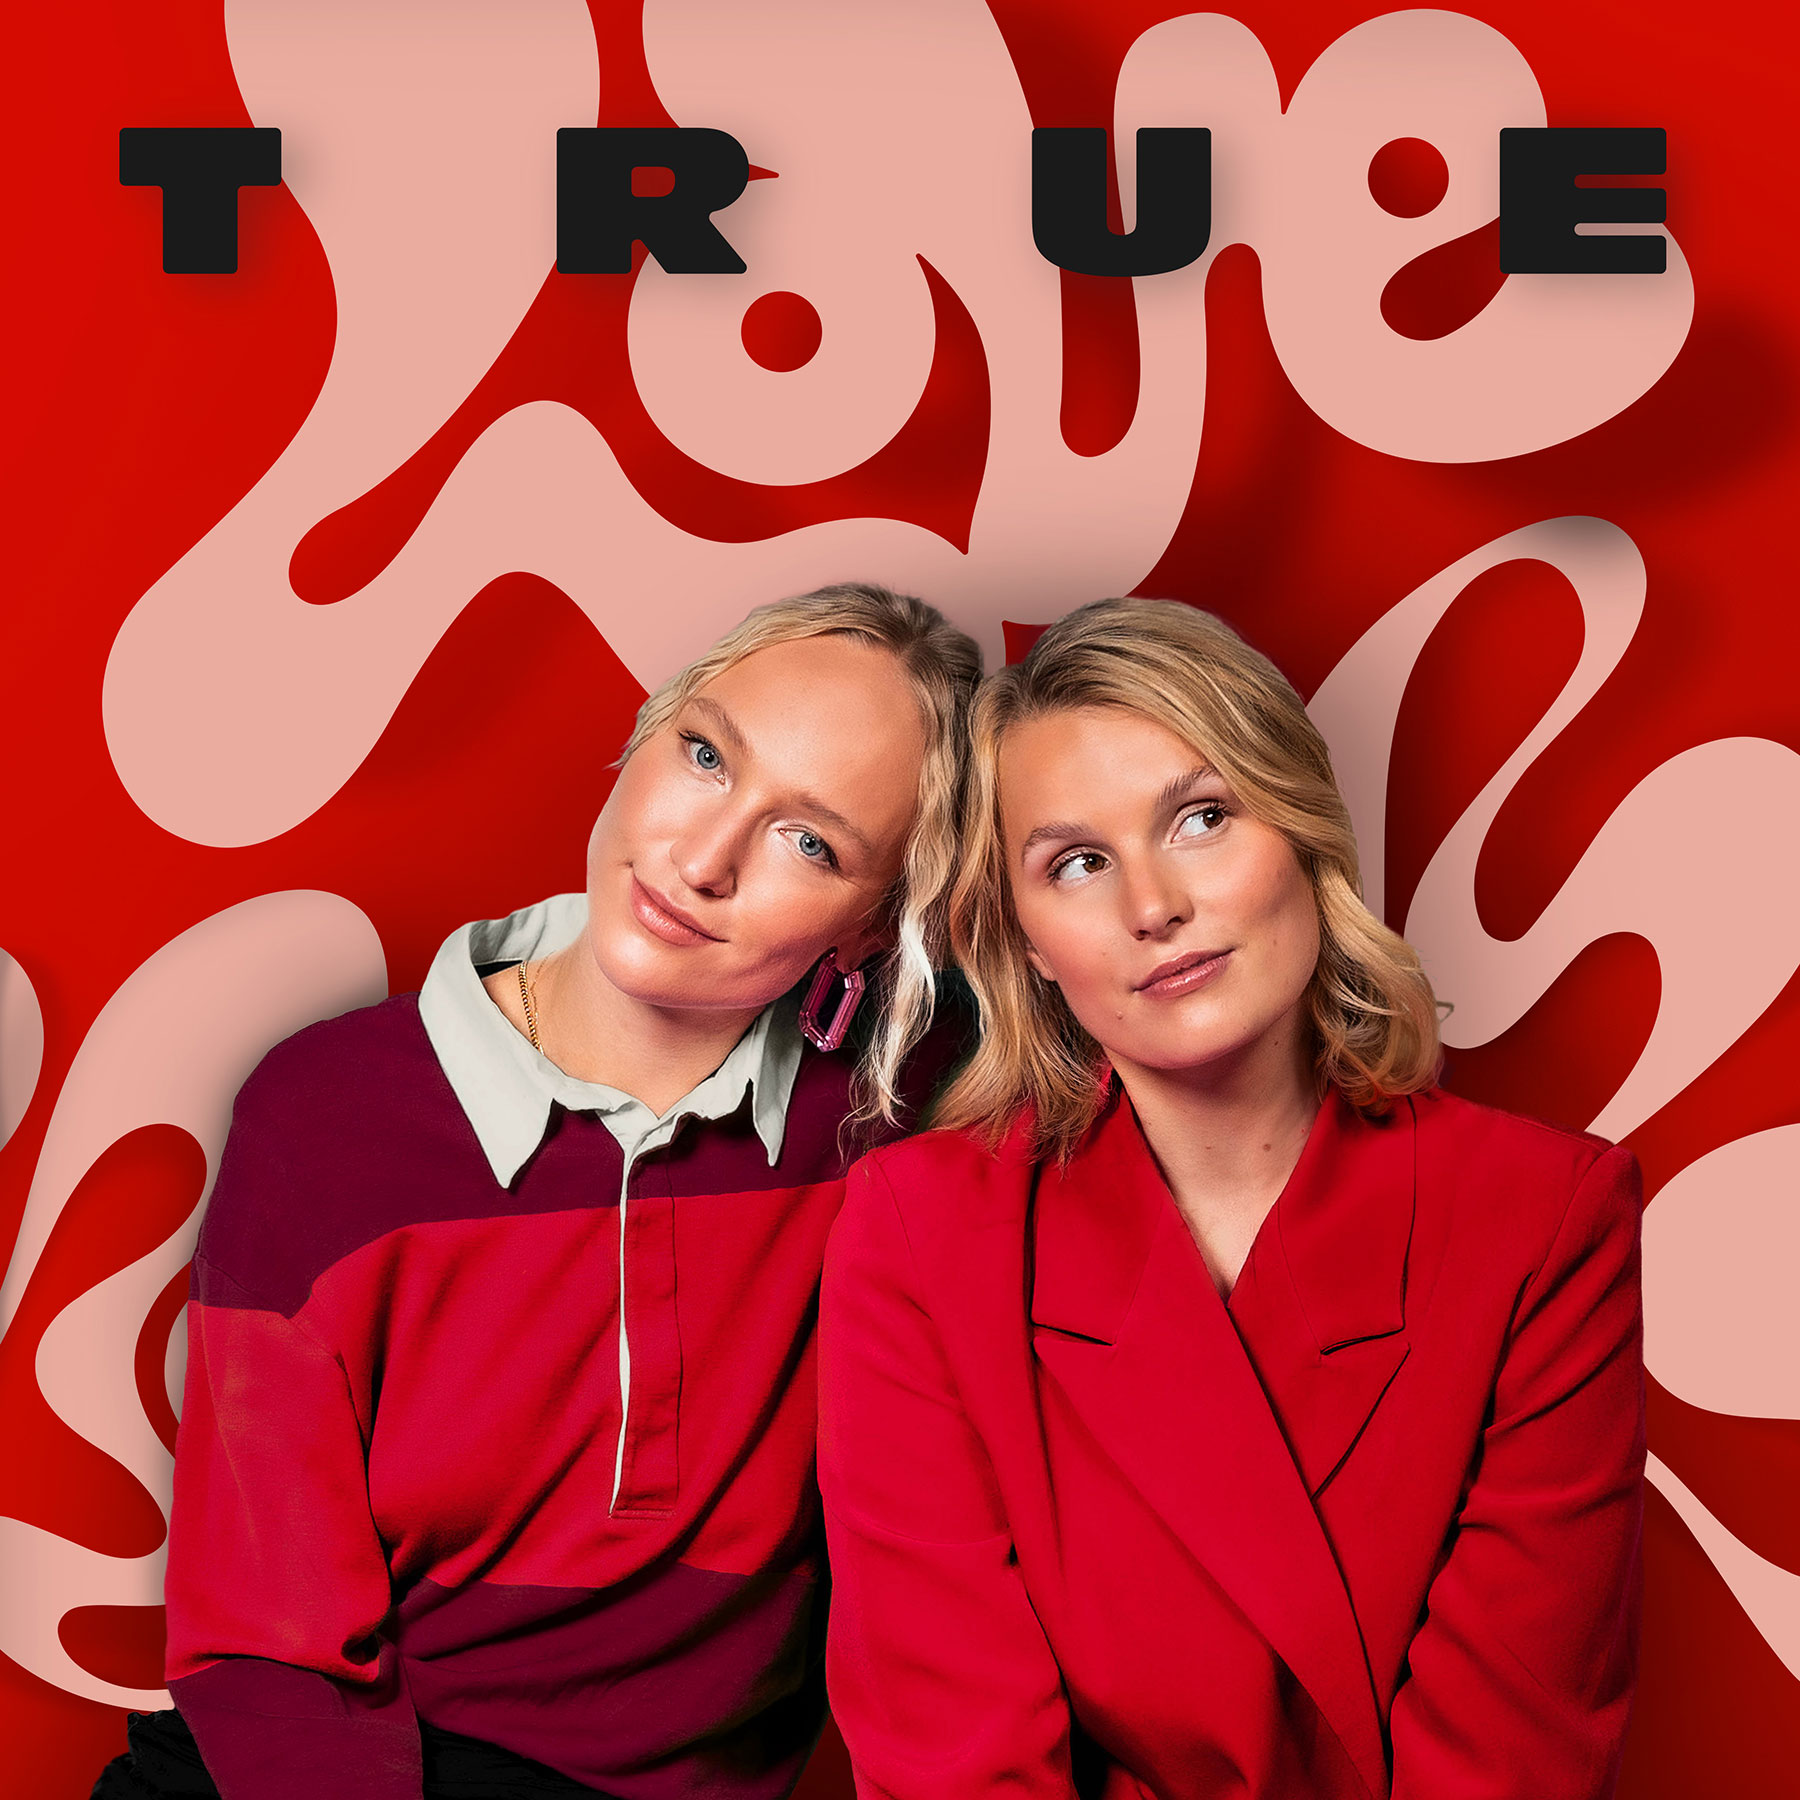 TRUE LOVE: Trailer